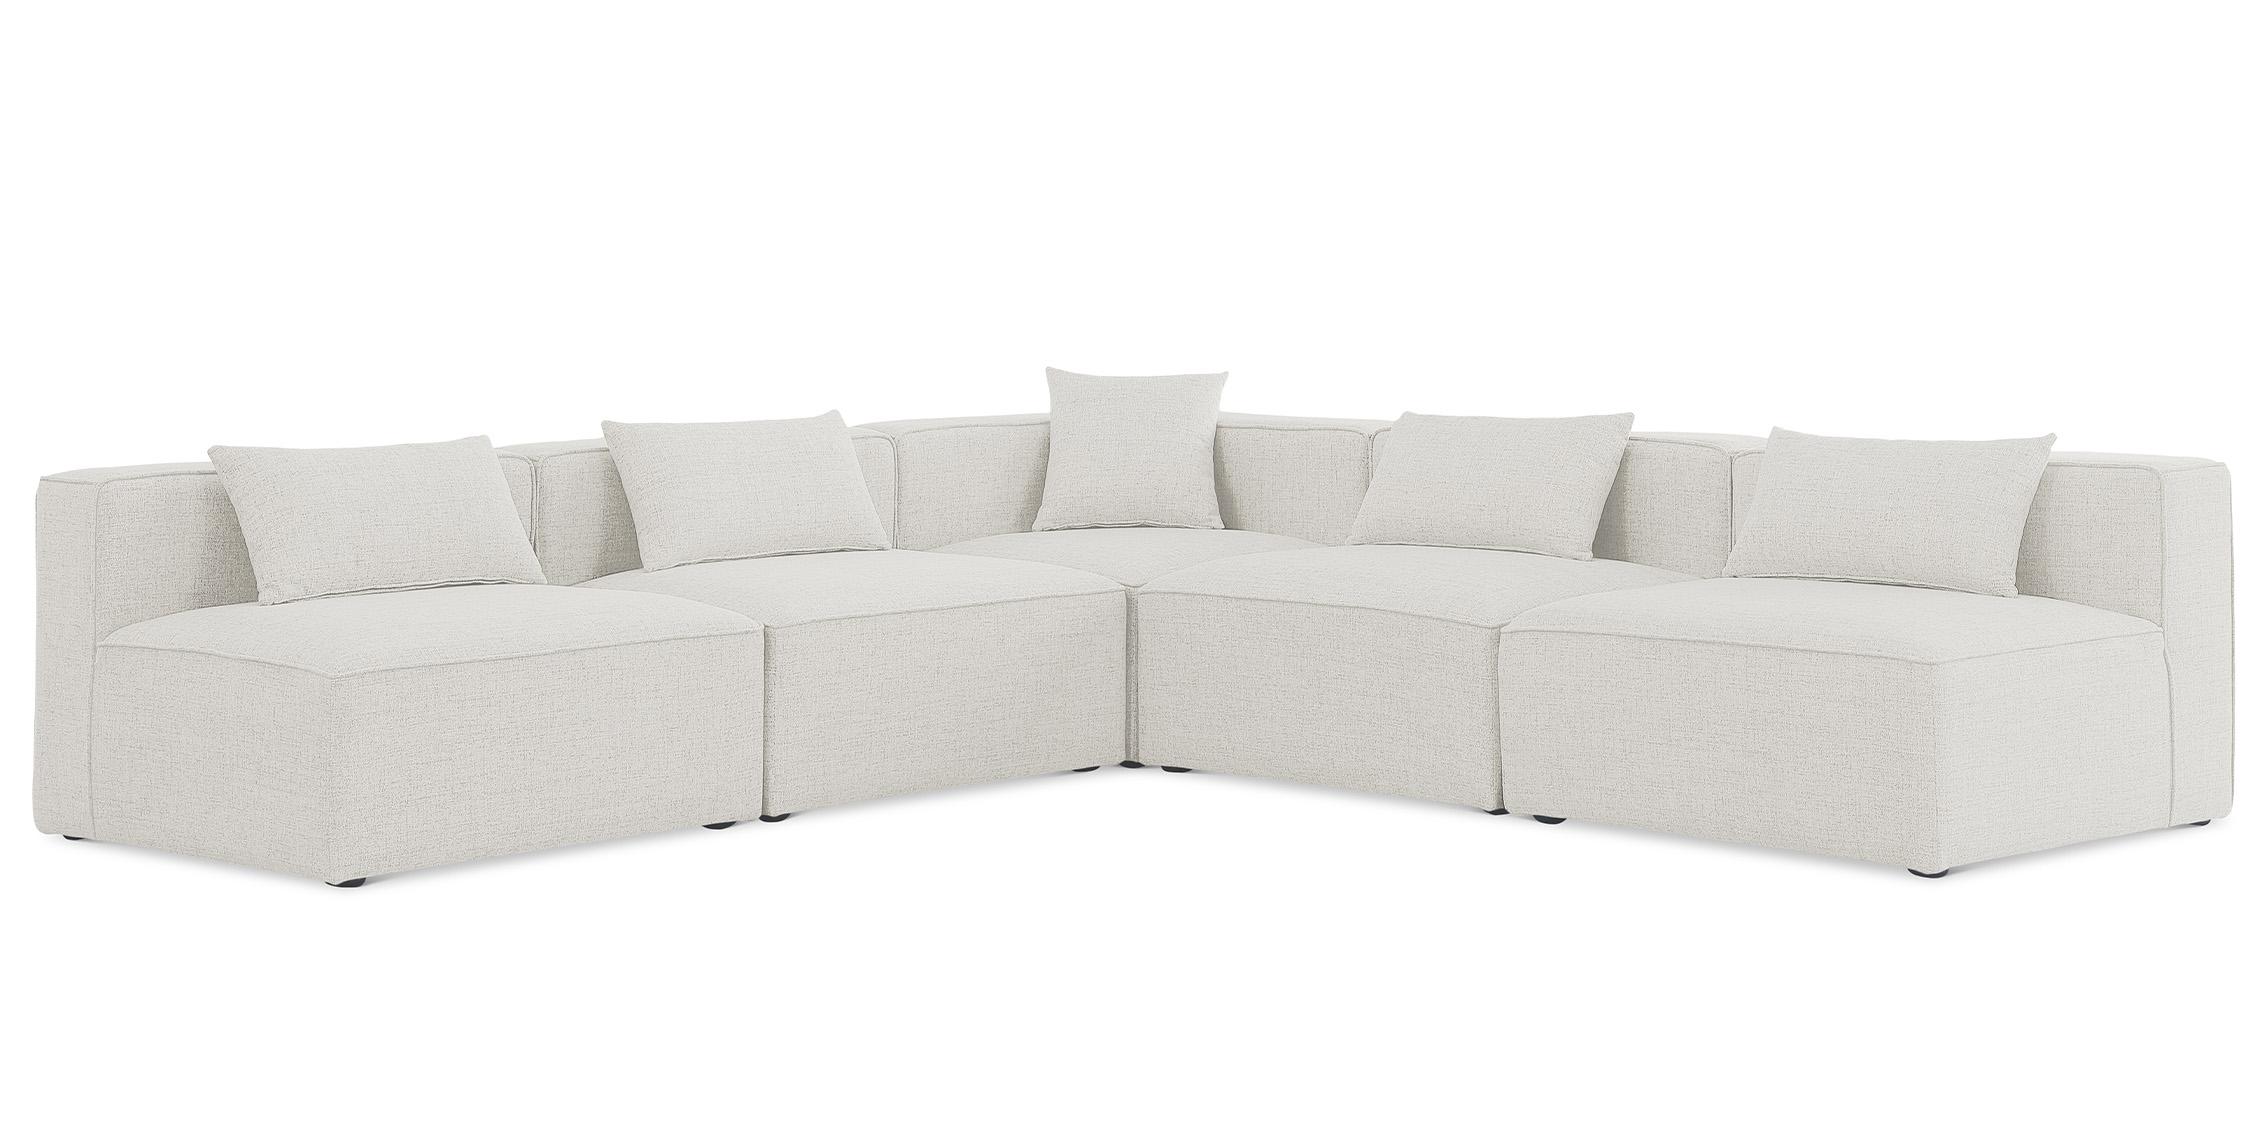 Contemporary, Modern Modular Sectional Sofa CUBE 630Cream-Sec5B 630Cream-Sec5B in Cream Linen